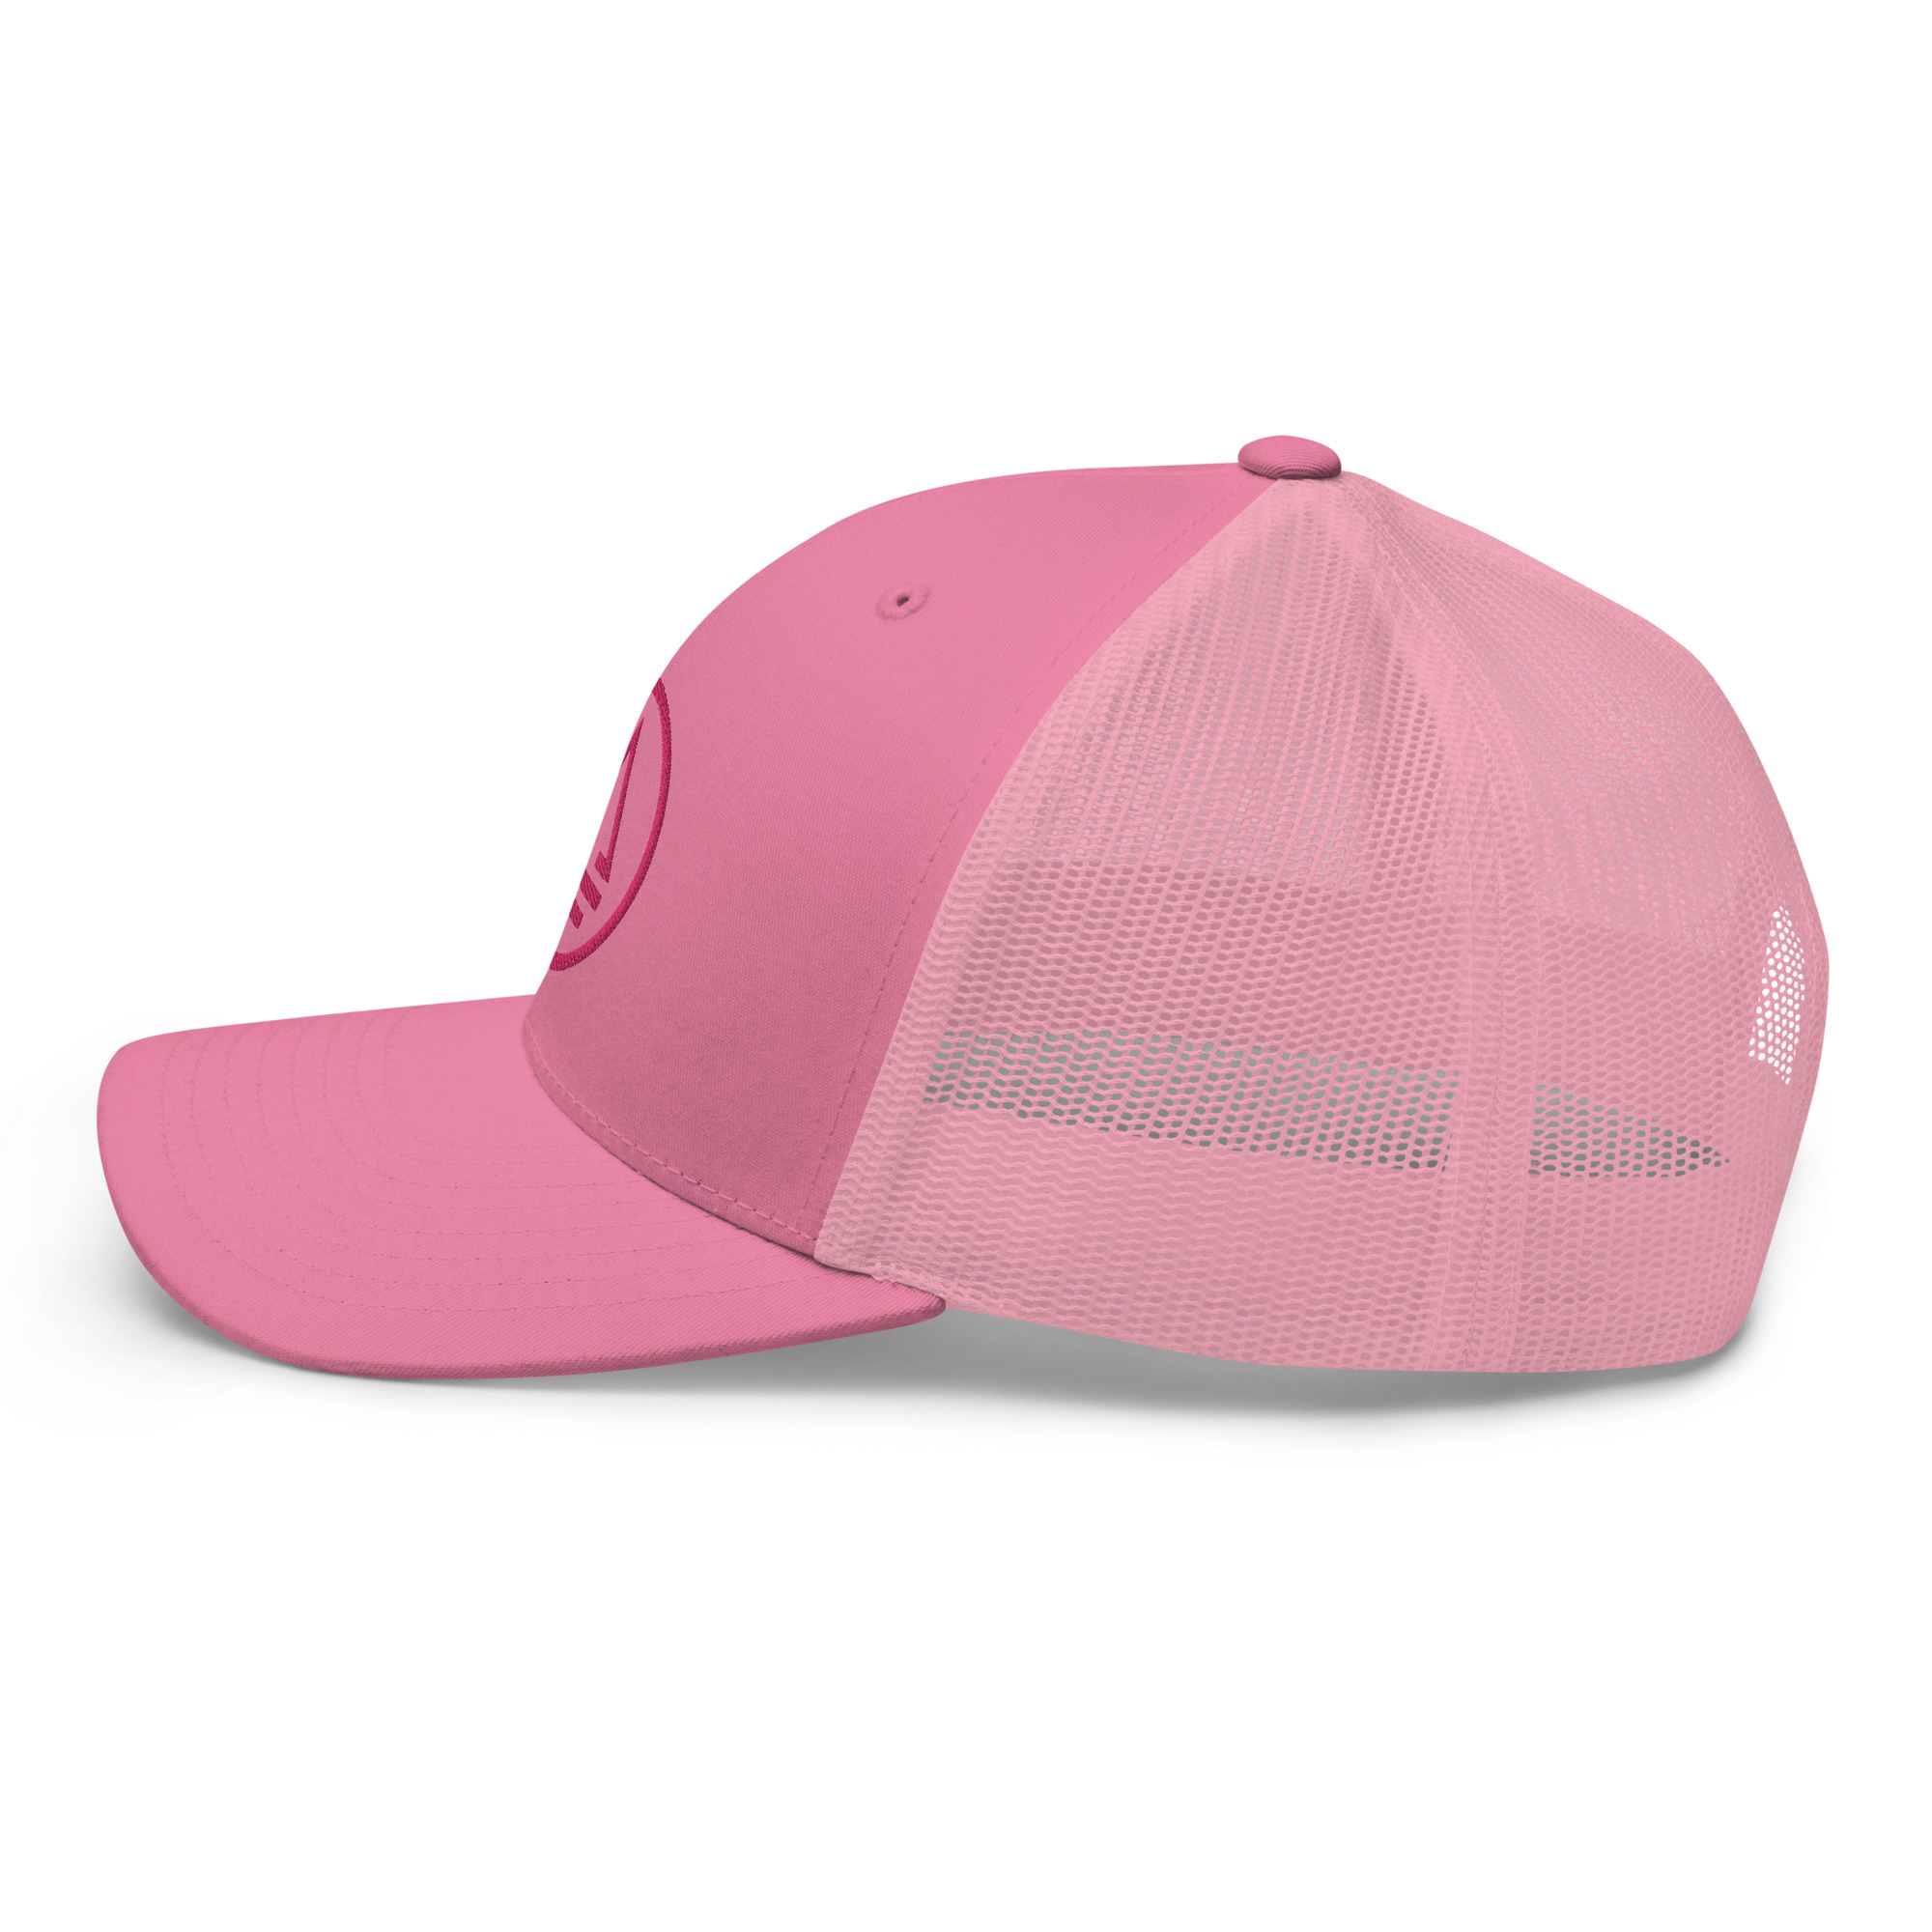 retro-trucker-hat-pink-left-64c9b2279db4d.jpg